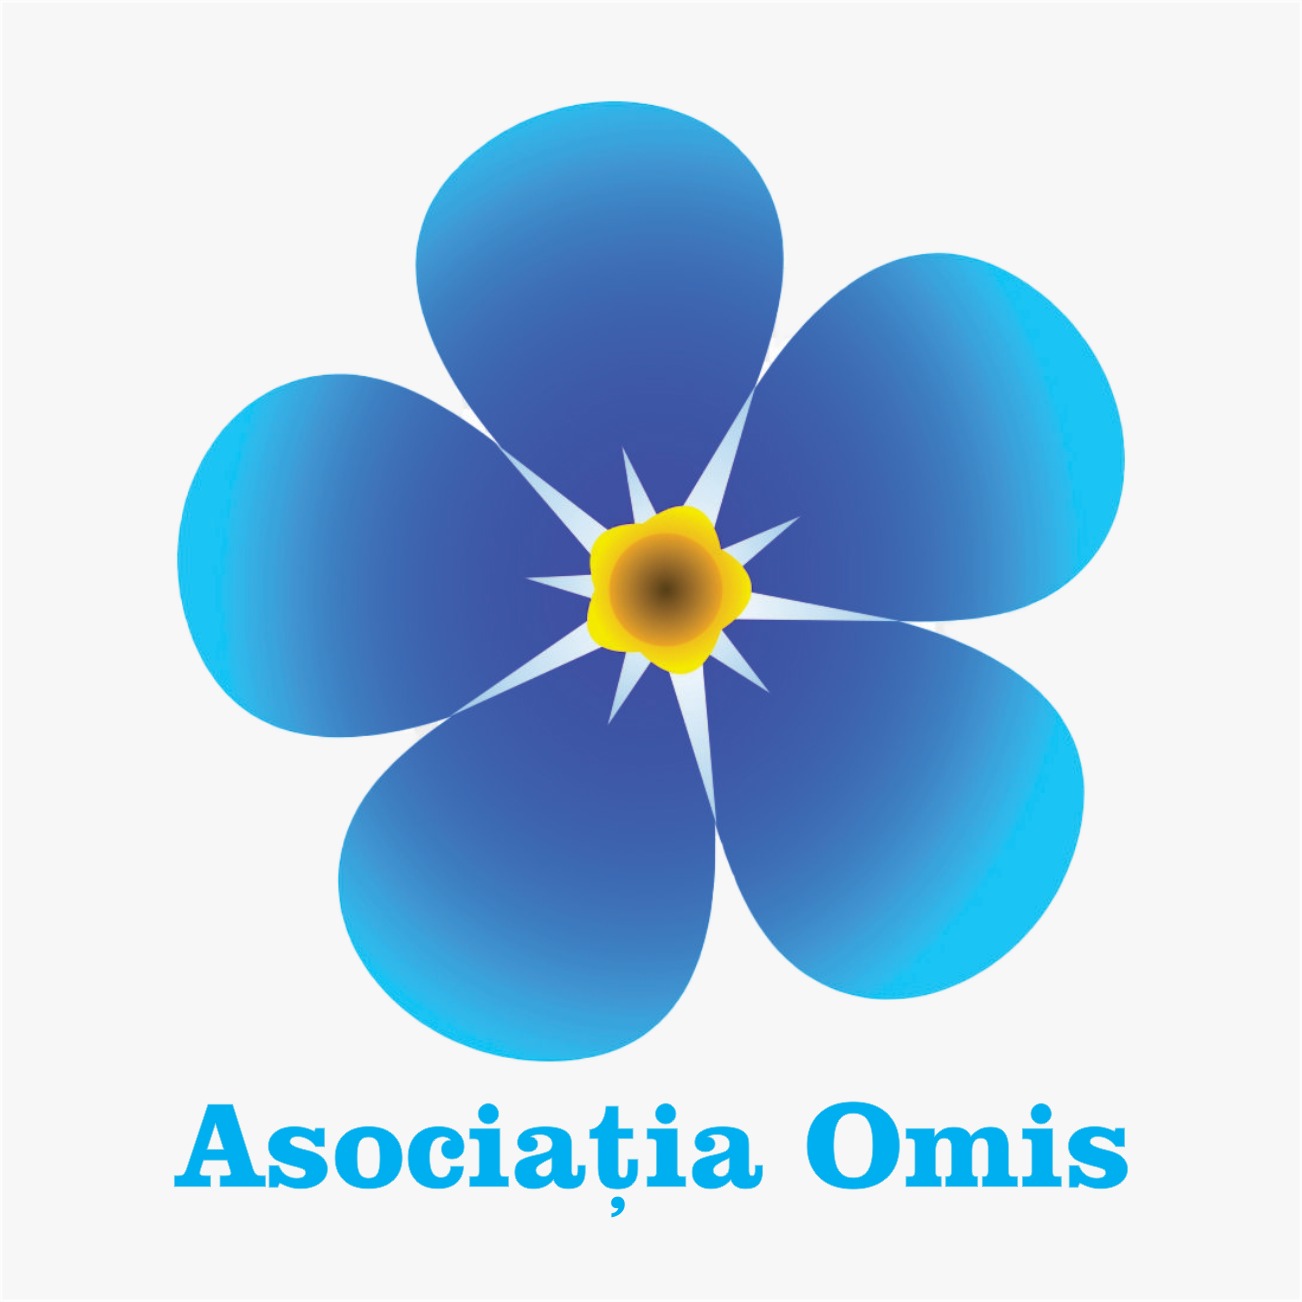 Asociatia Omis logo